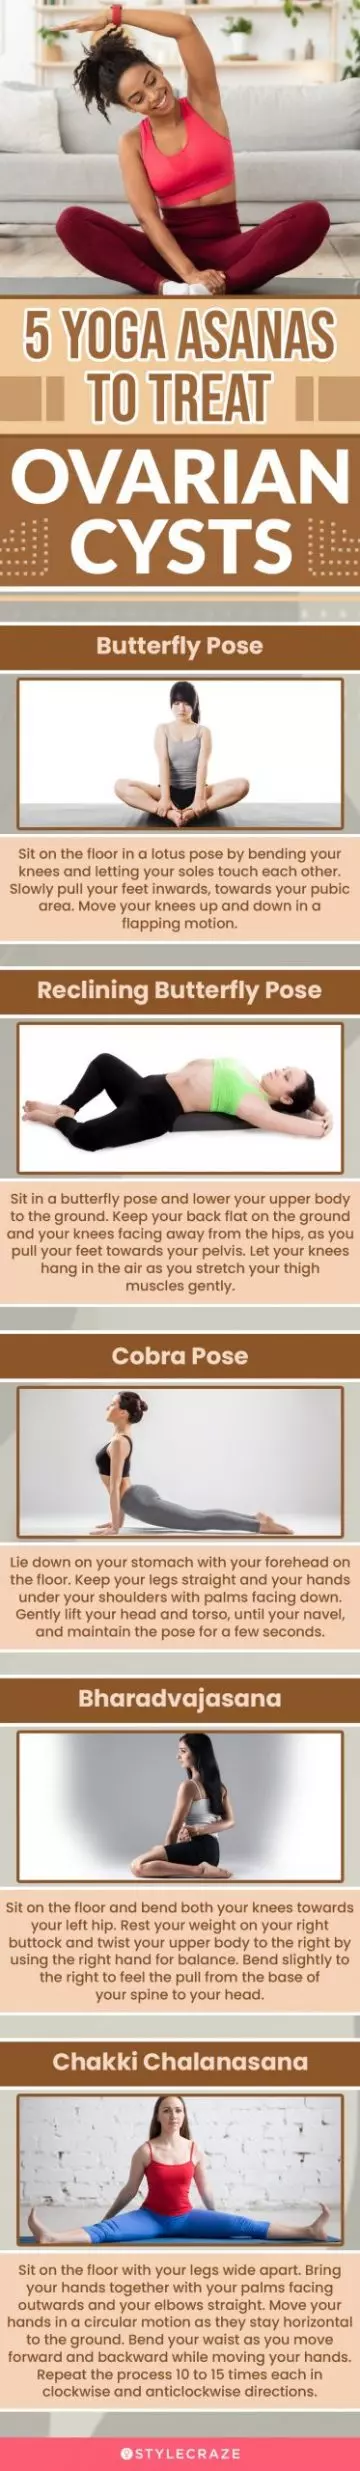 5 yoga asanas to treat ovarian cysts (infographic)